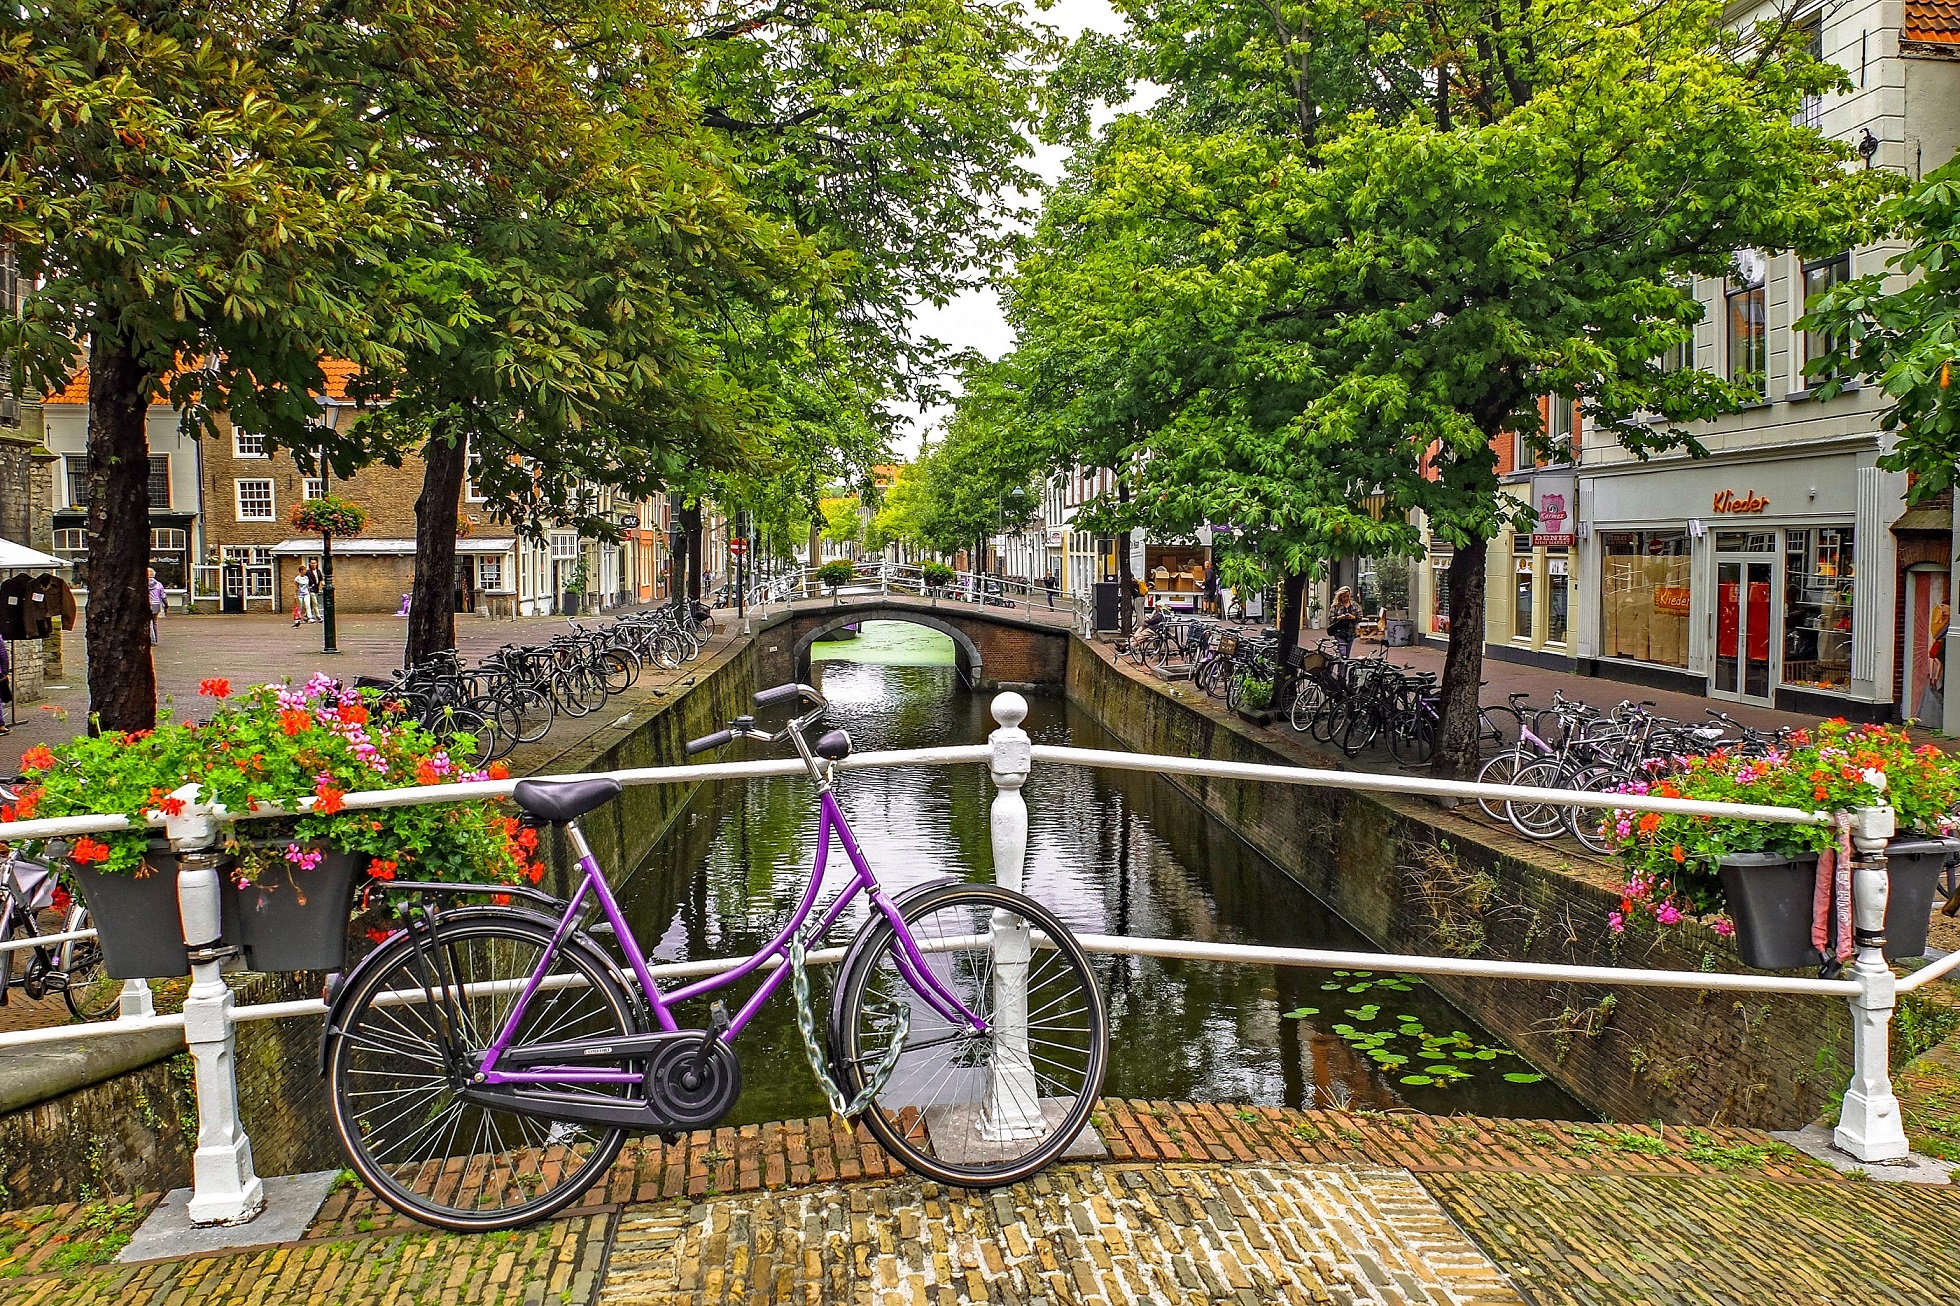 Bike leaning against bridge railing in Amsterdam.